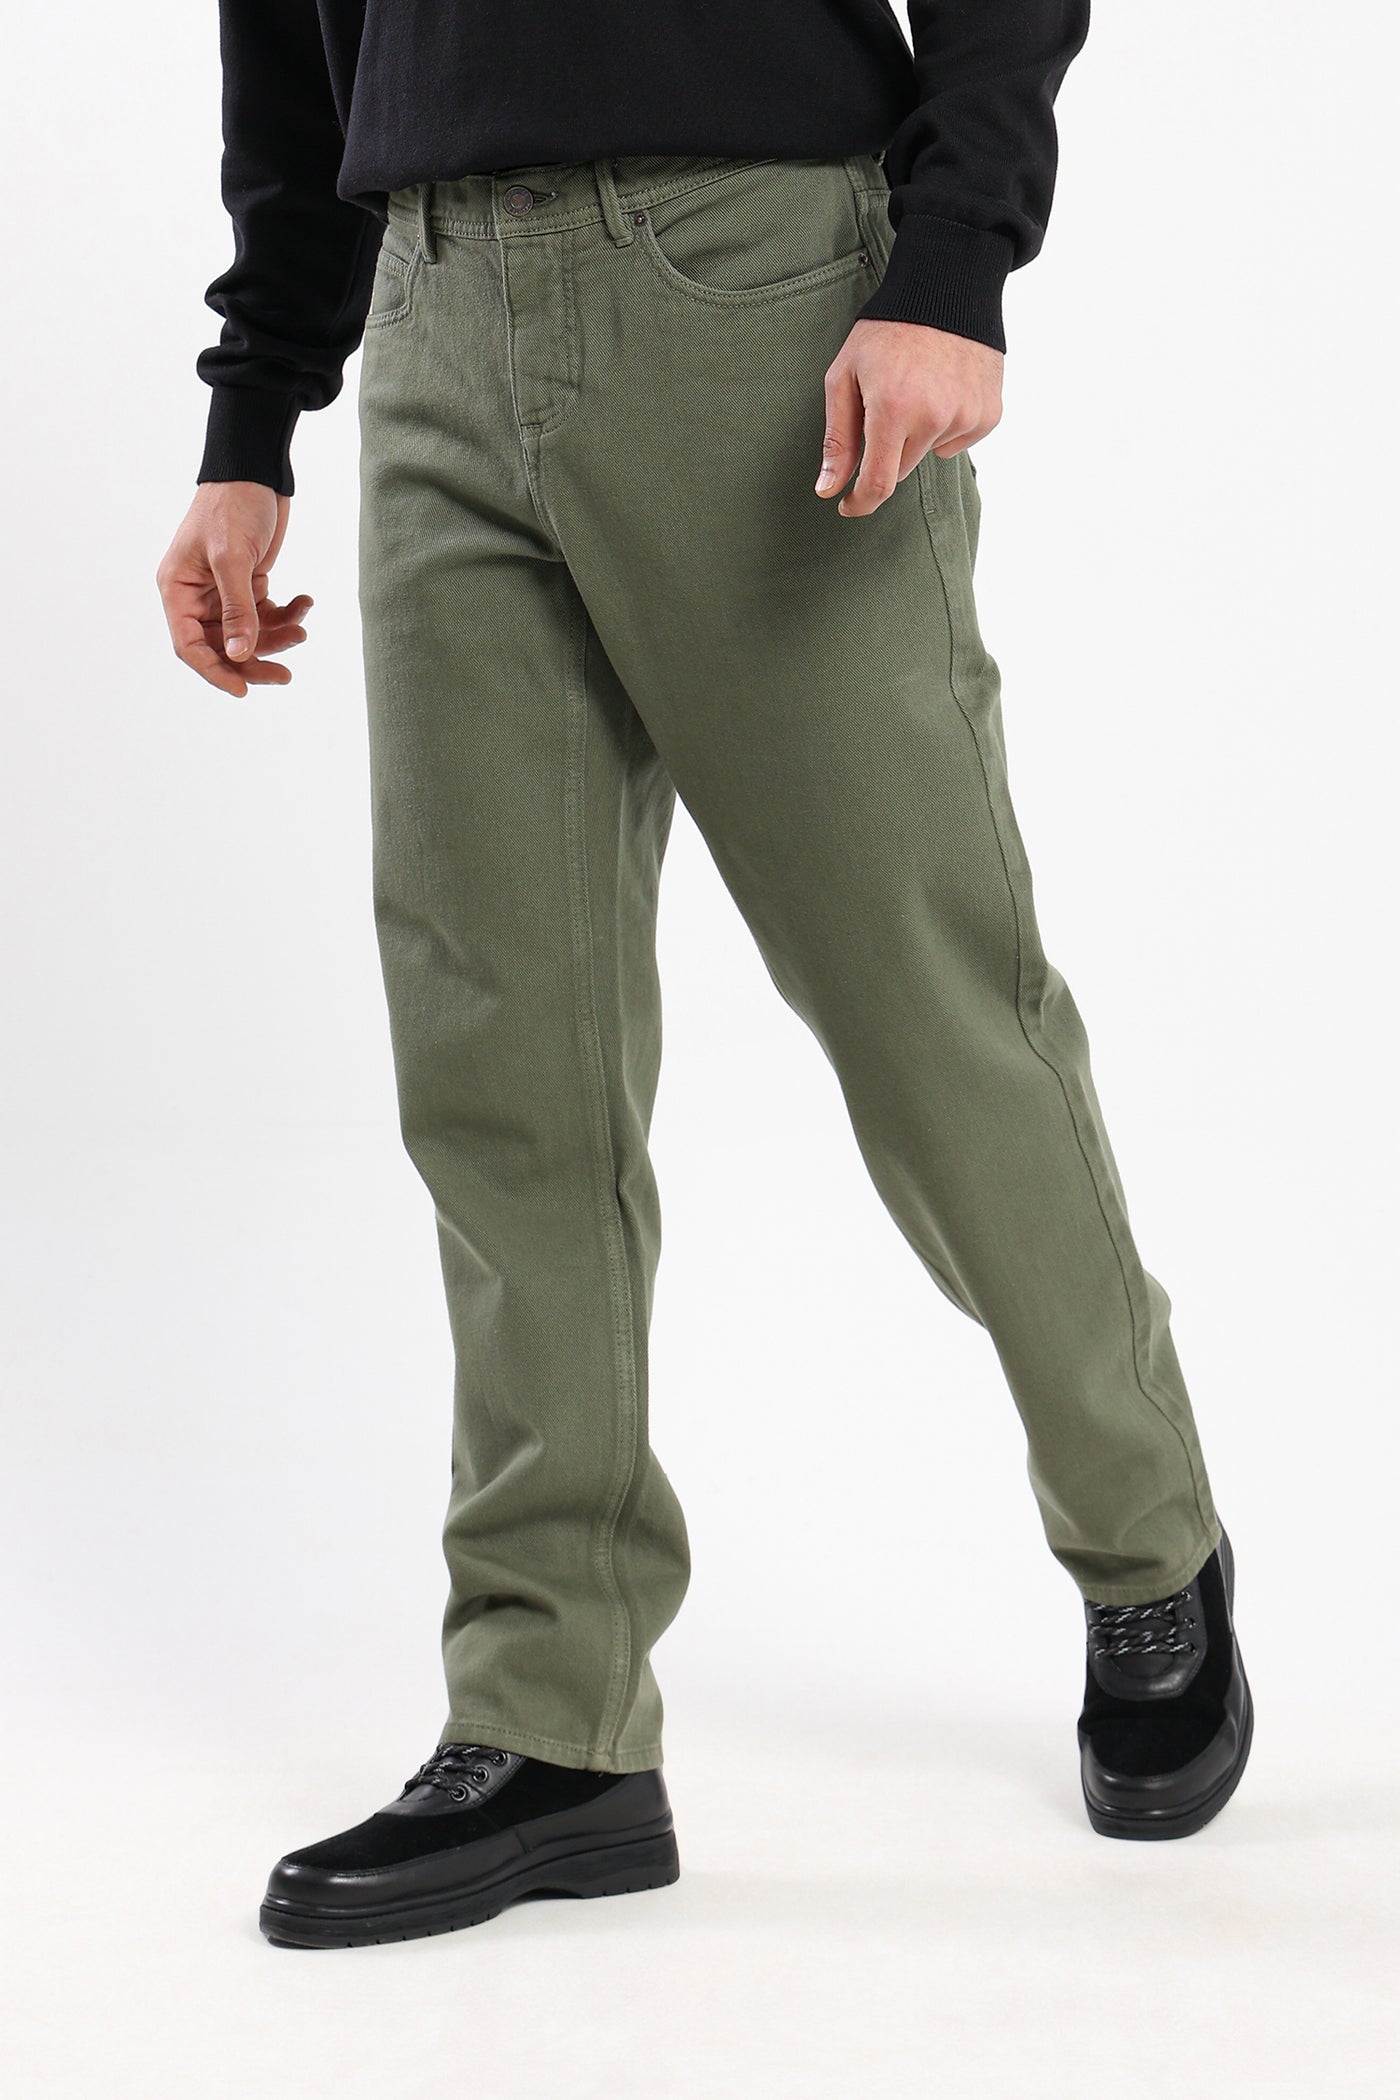 Pants - Modern Fit - 5 Pockets